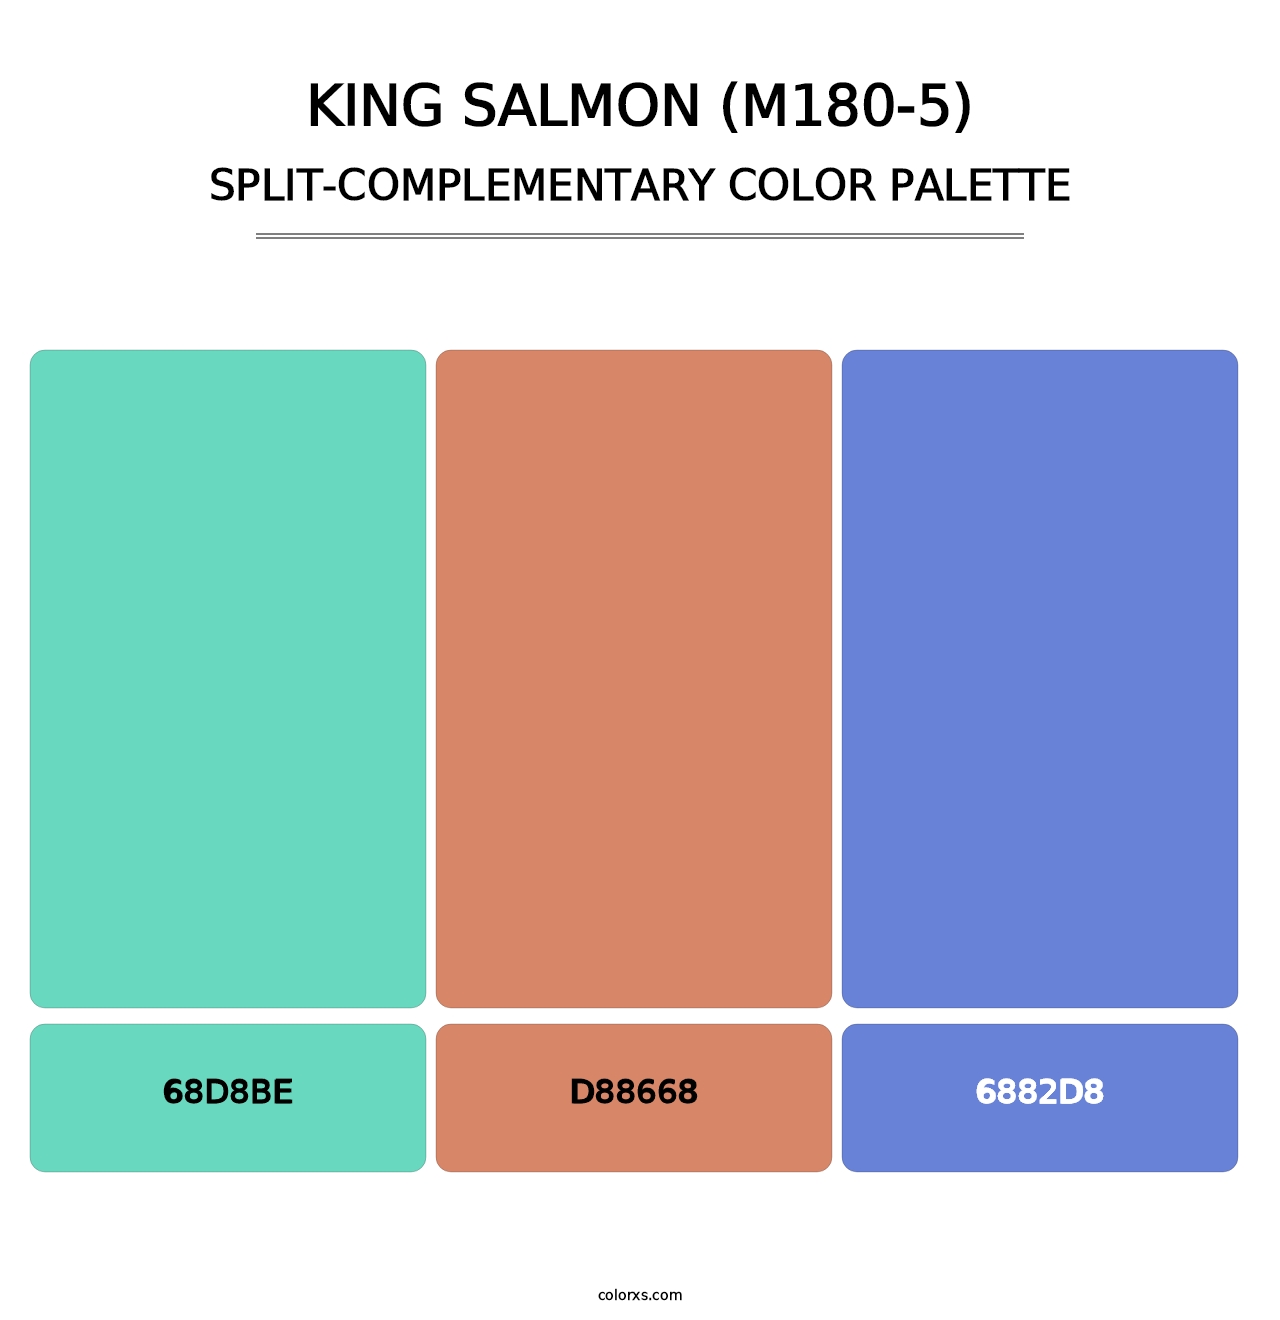 King Salmon (M180-5) - Split-Complementary Color Palette